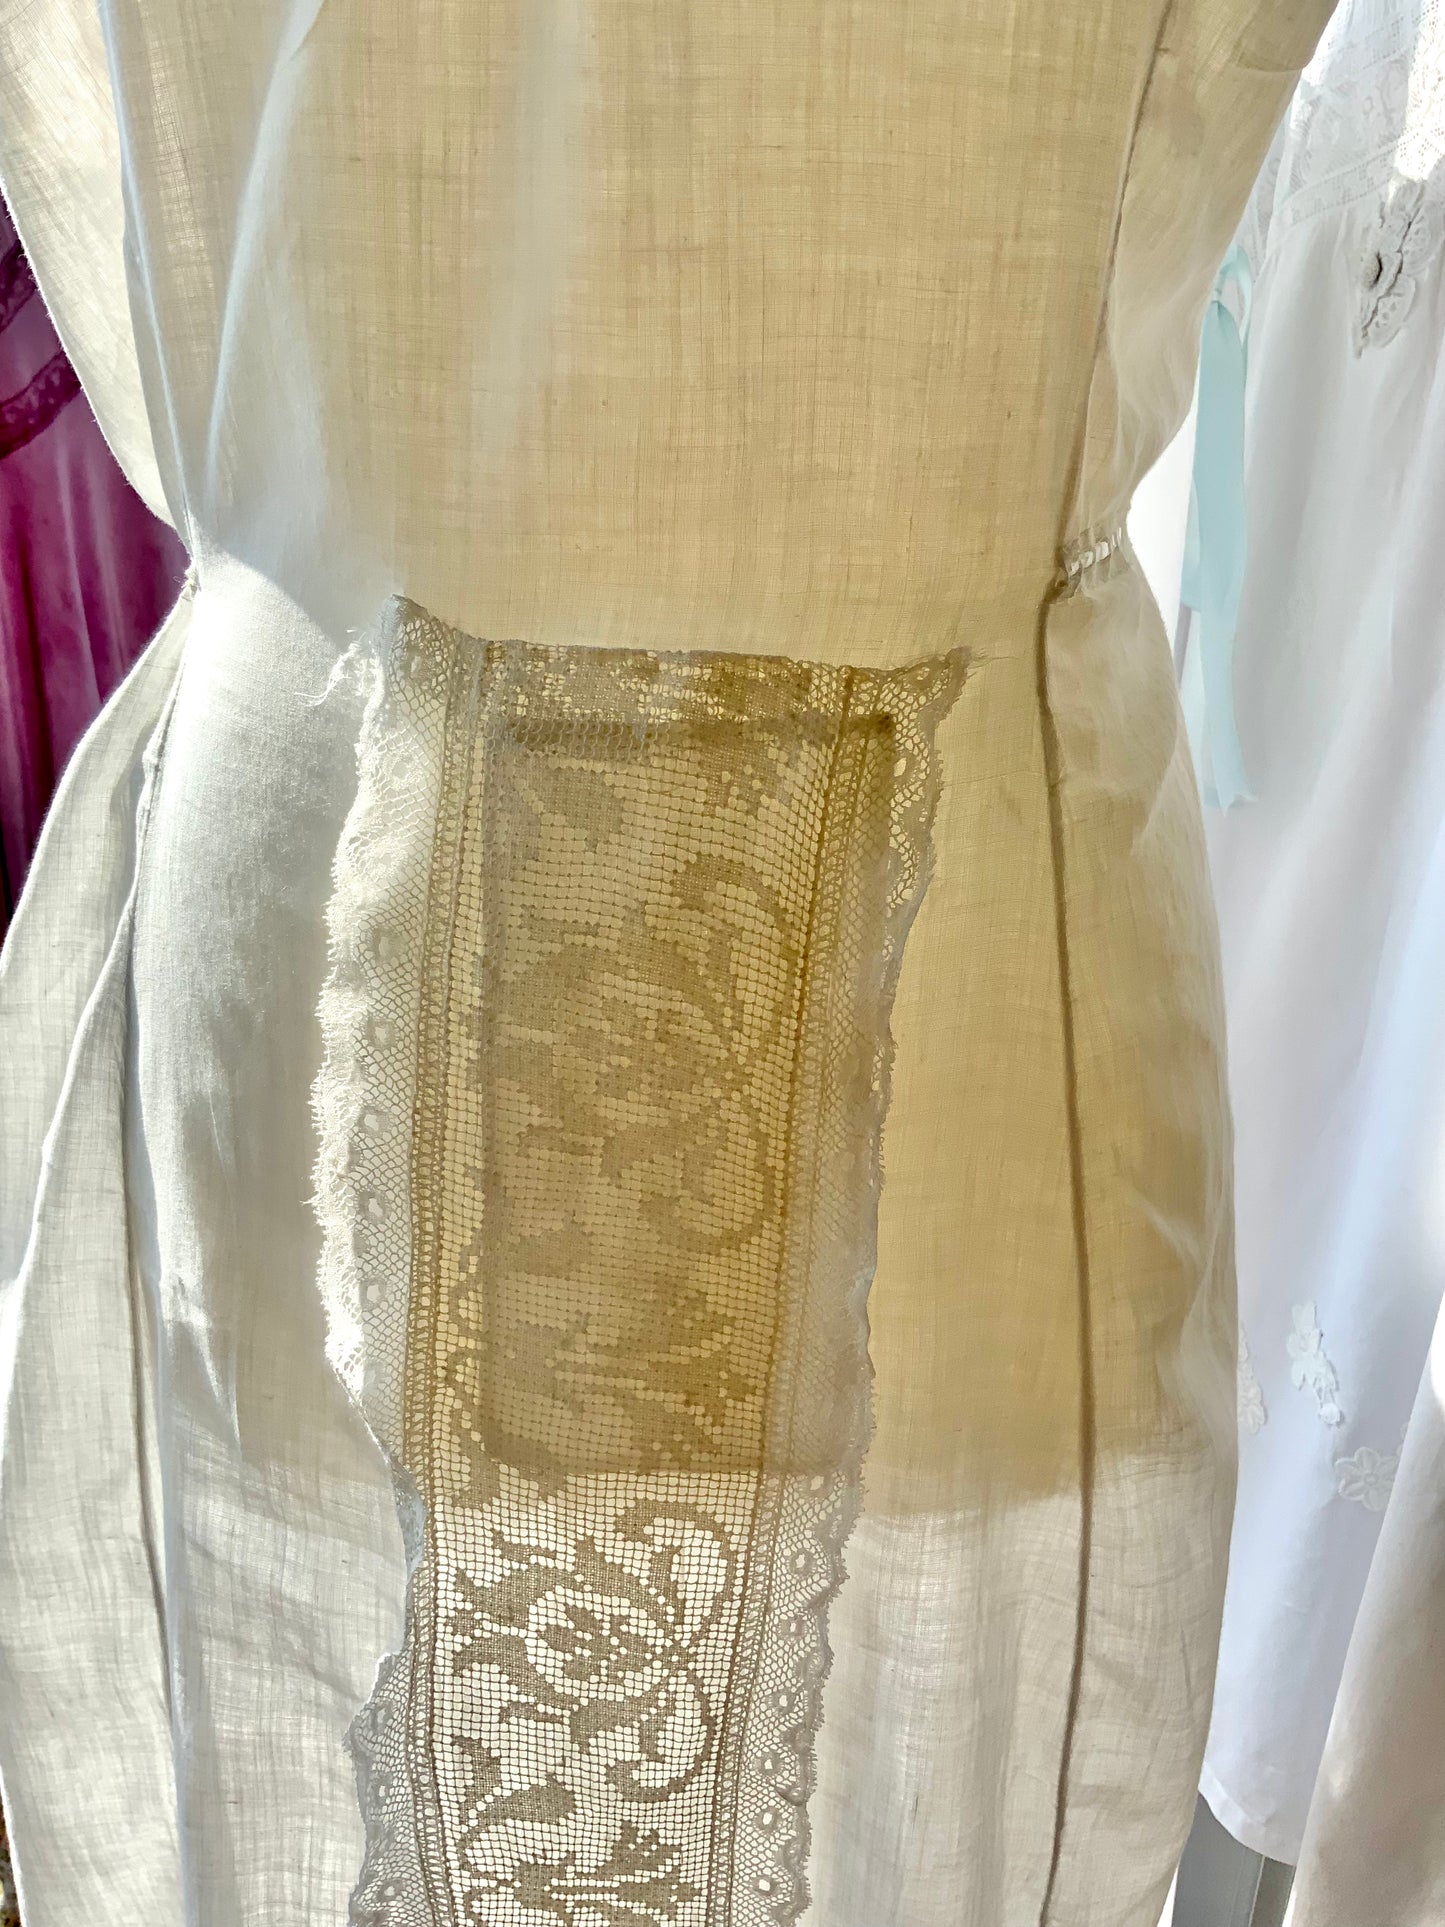 Antique Slip Dress / Nightgown